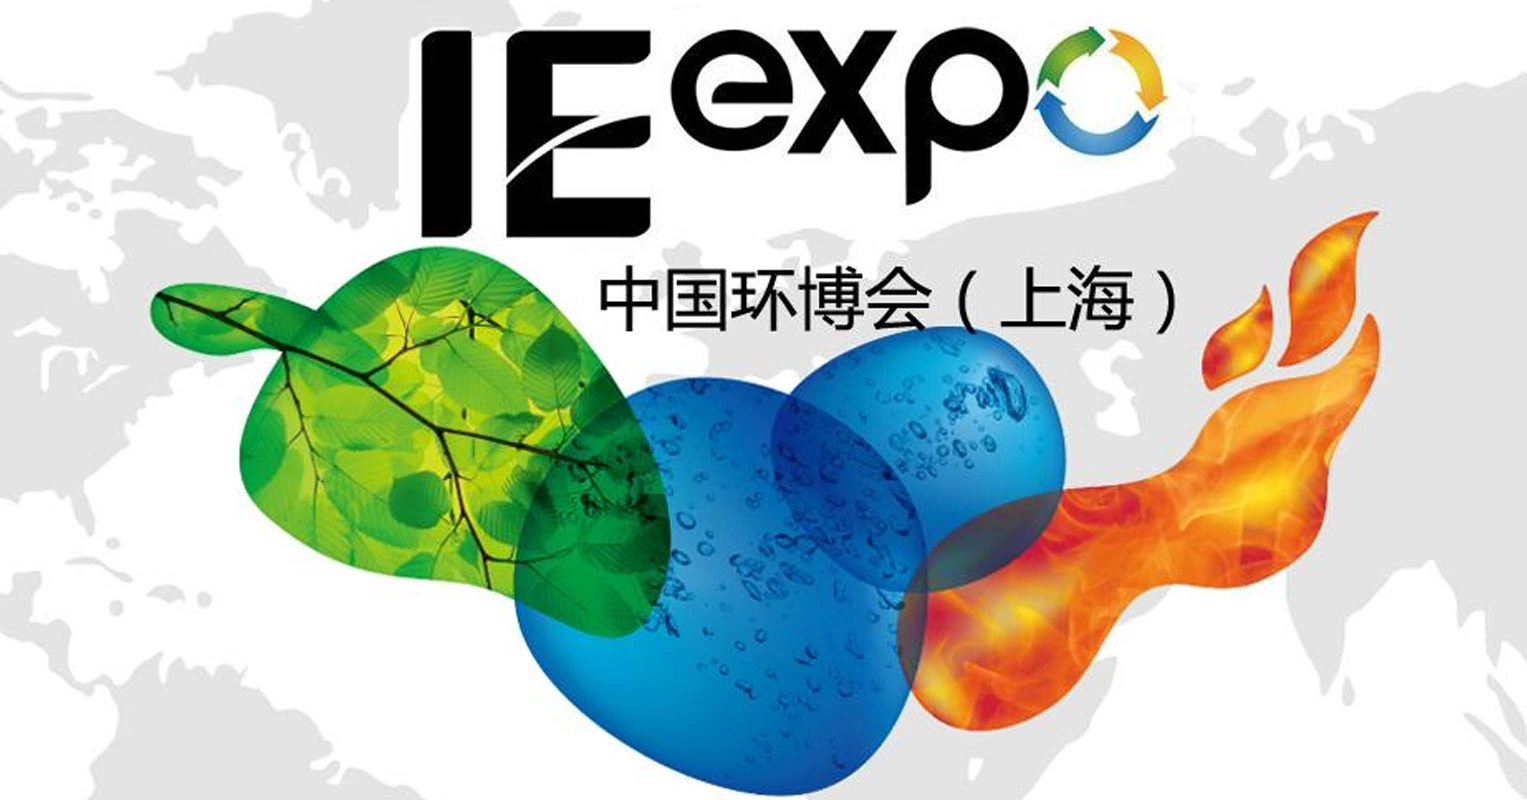 Supmea participa en IE expo 2021